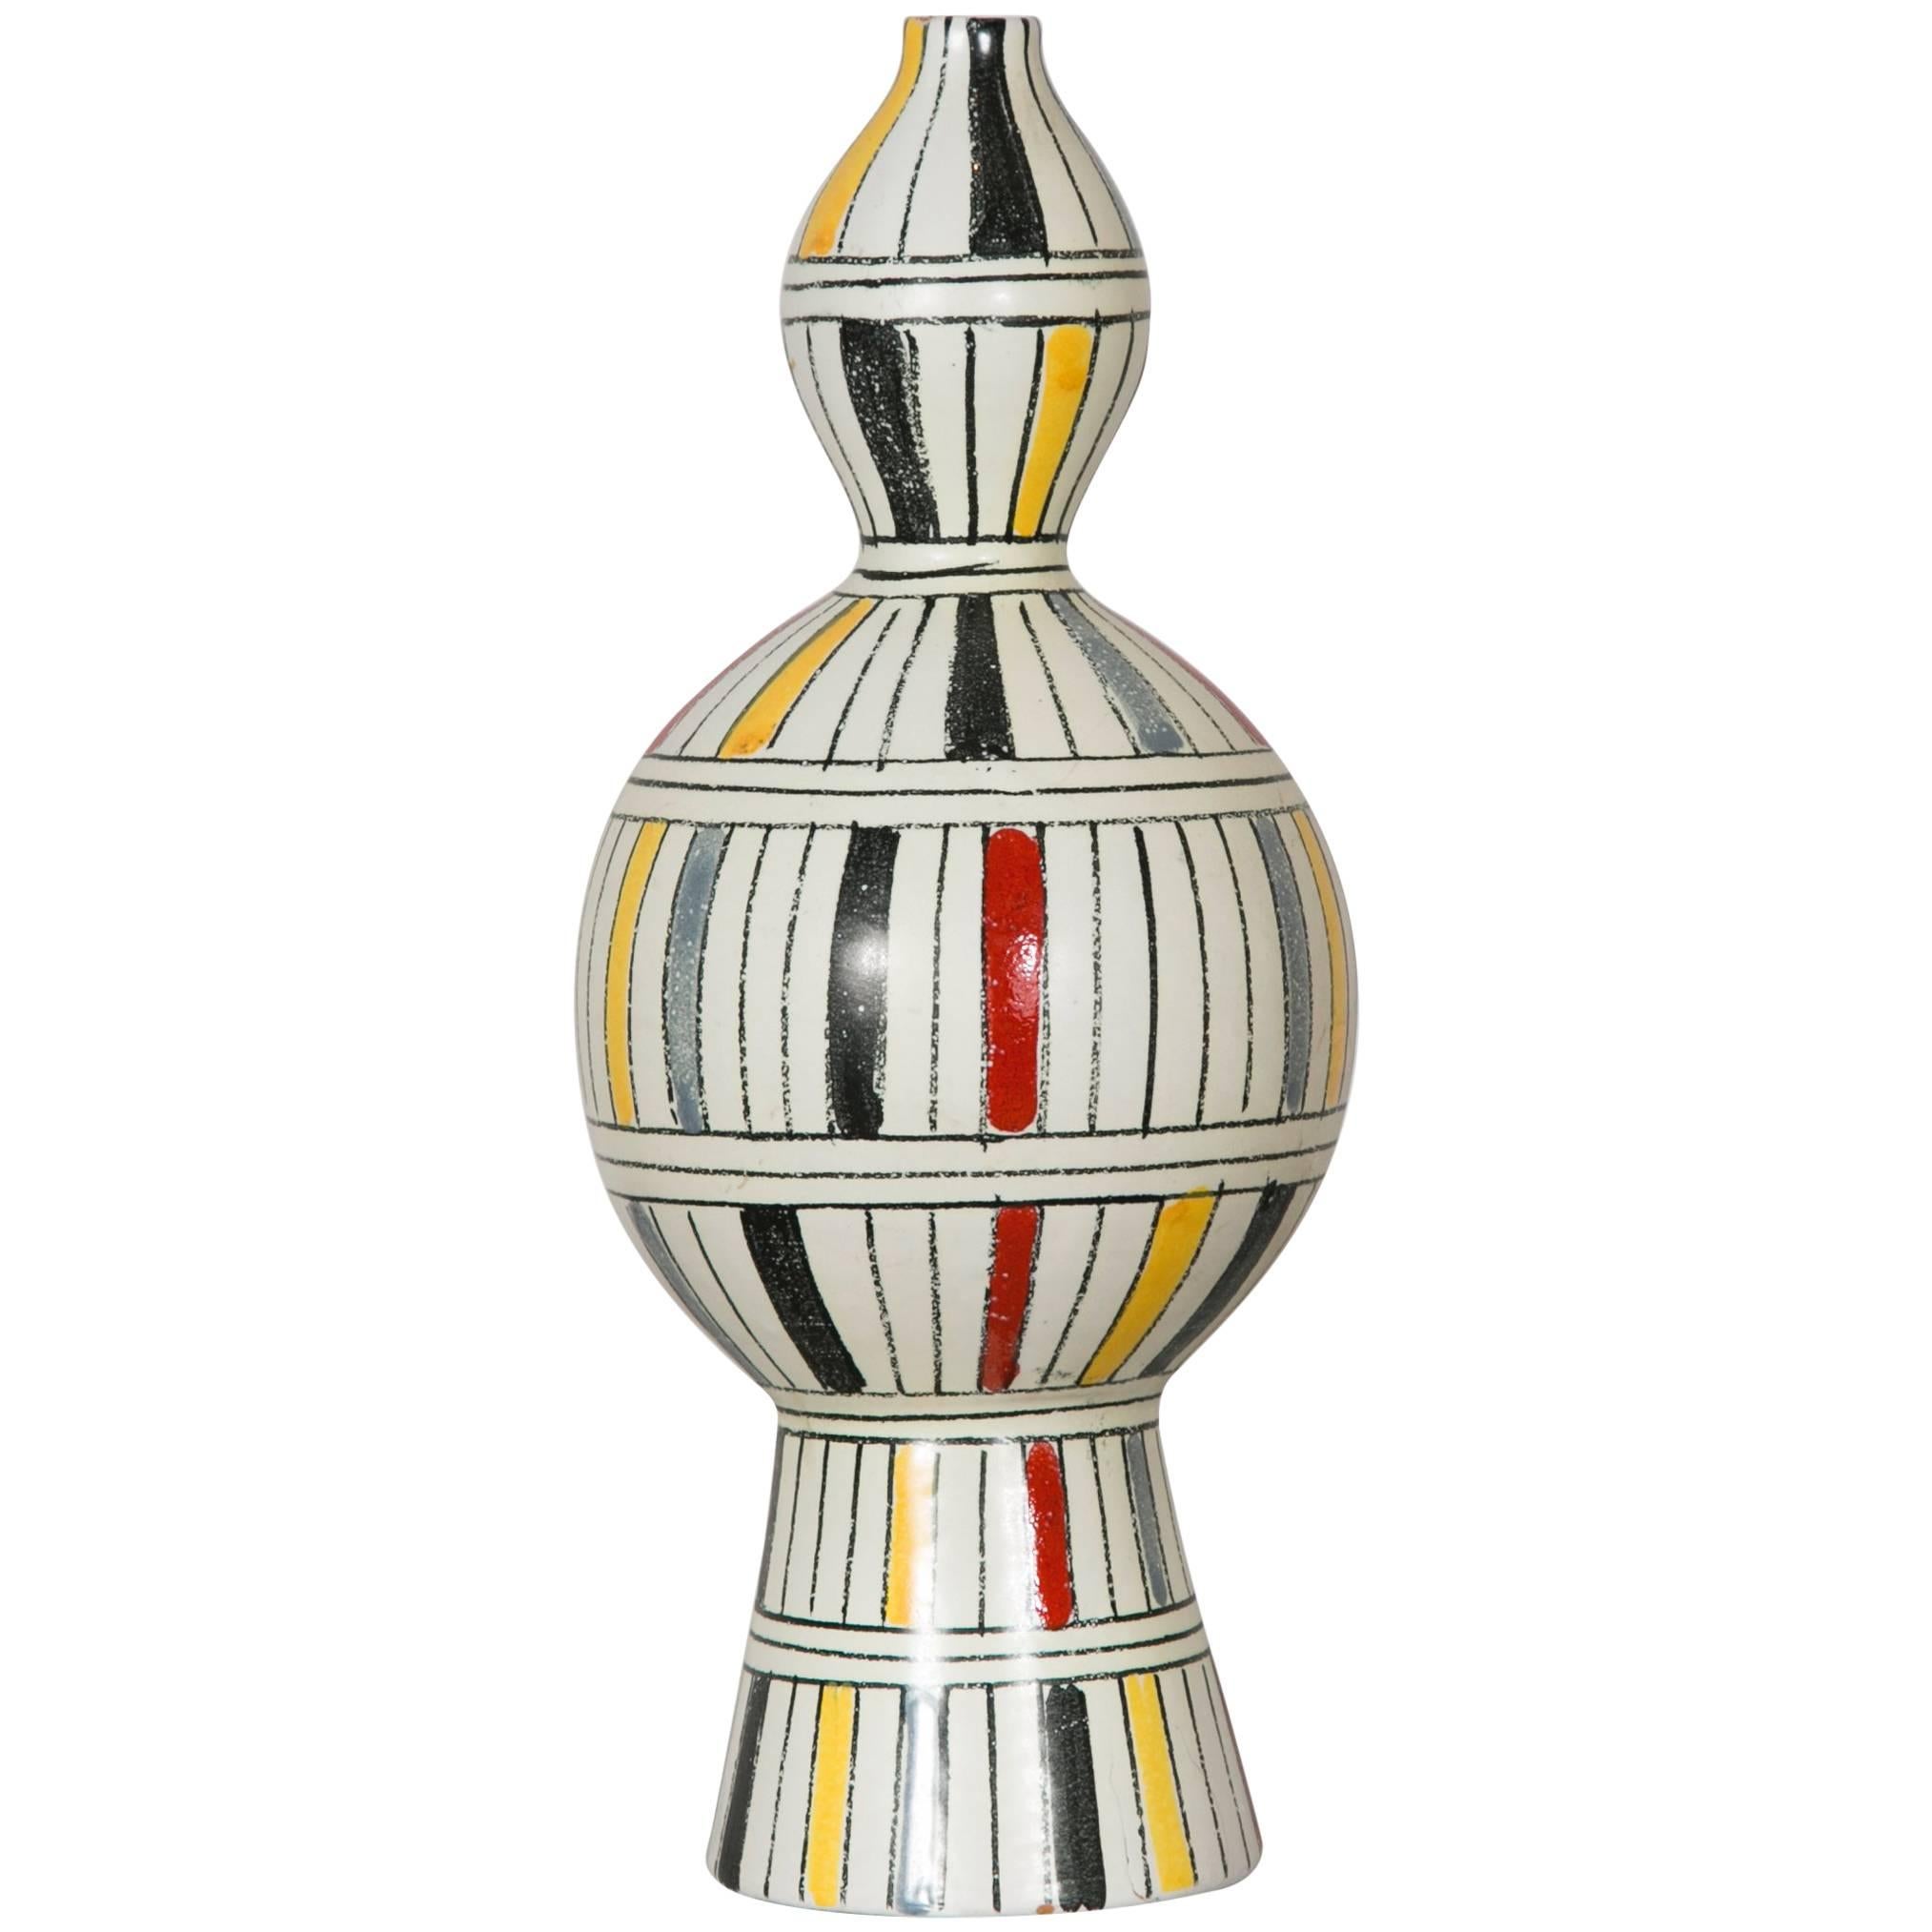 Ceramic Vase with Polychrome Striped Decor, Italy, 1960